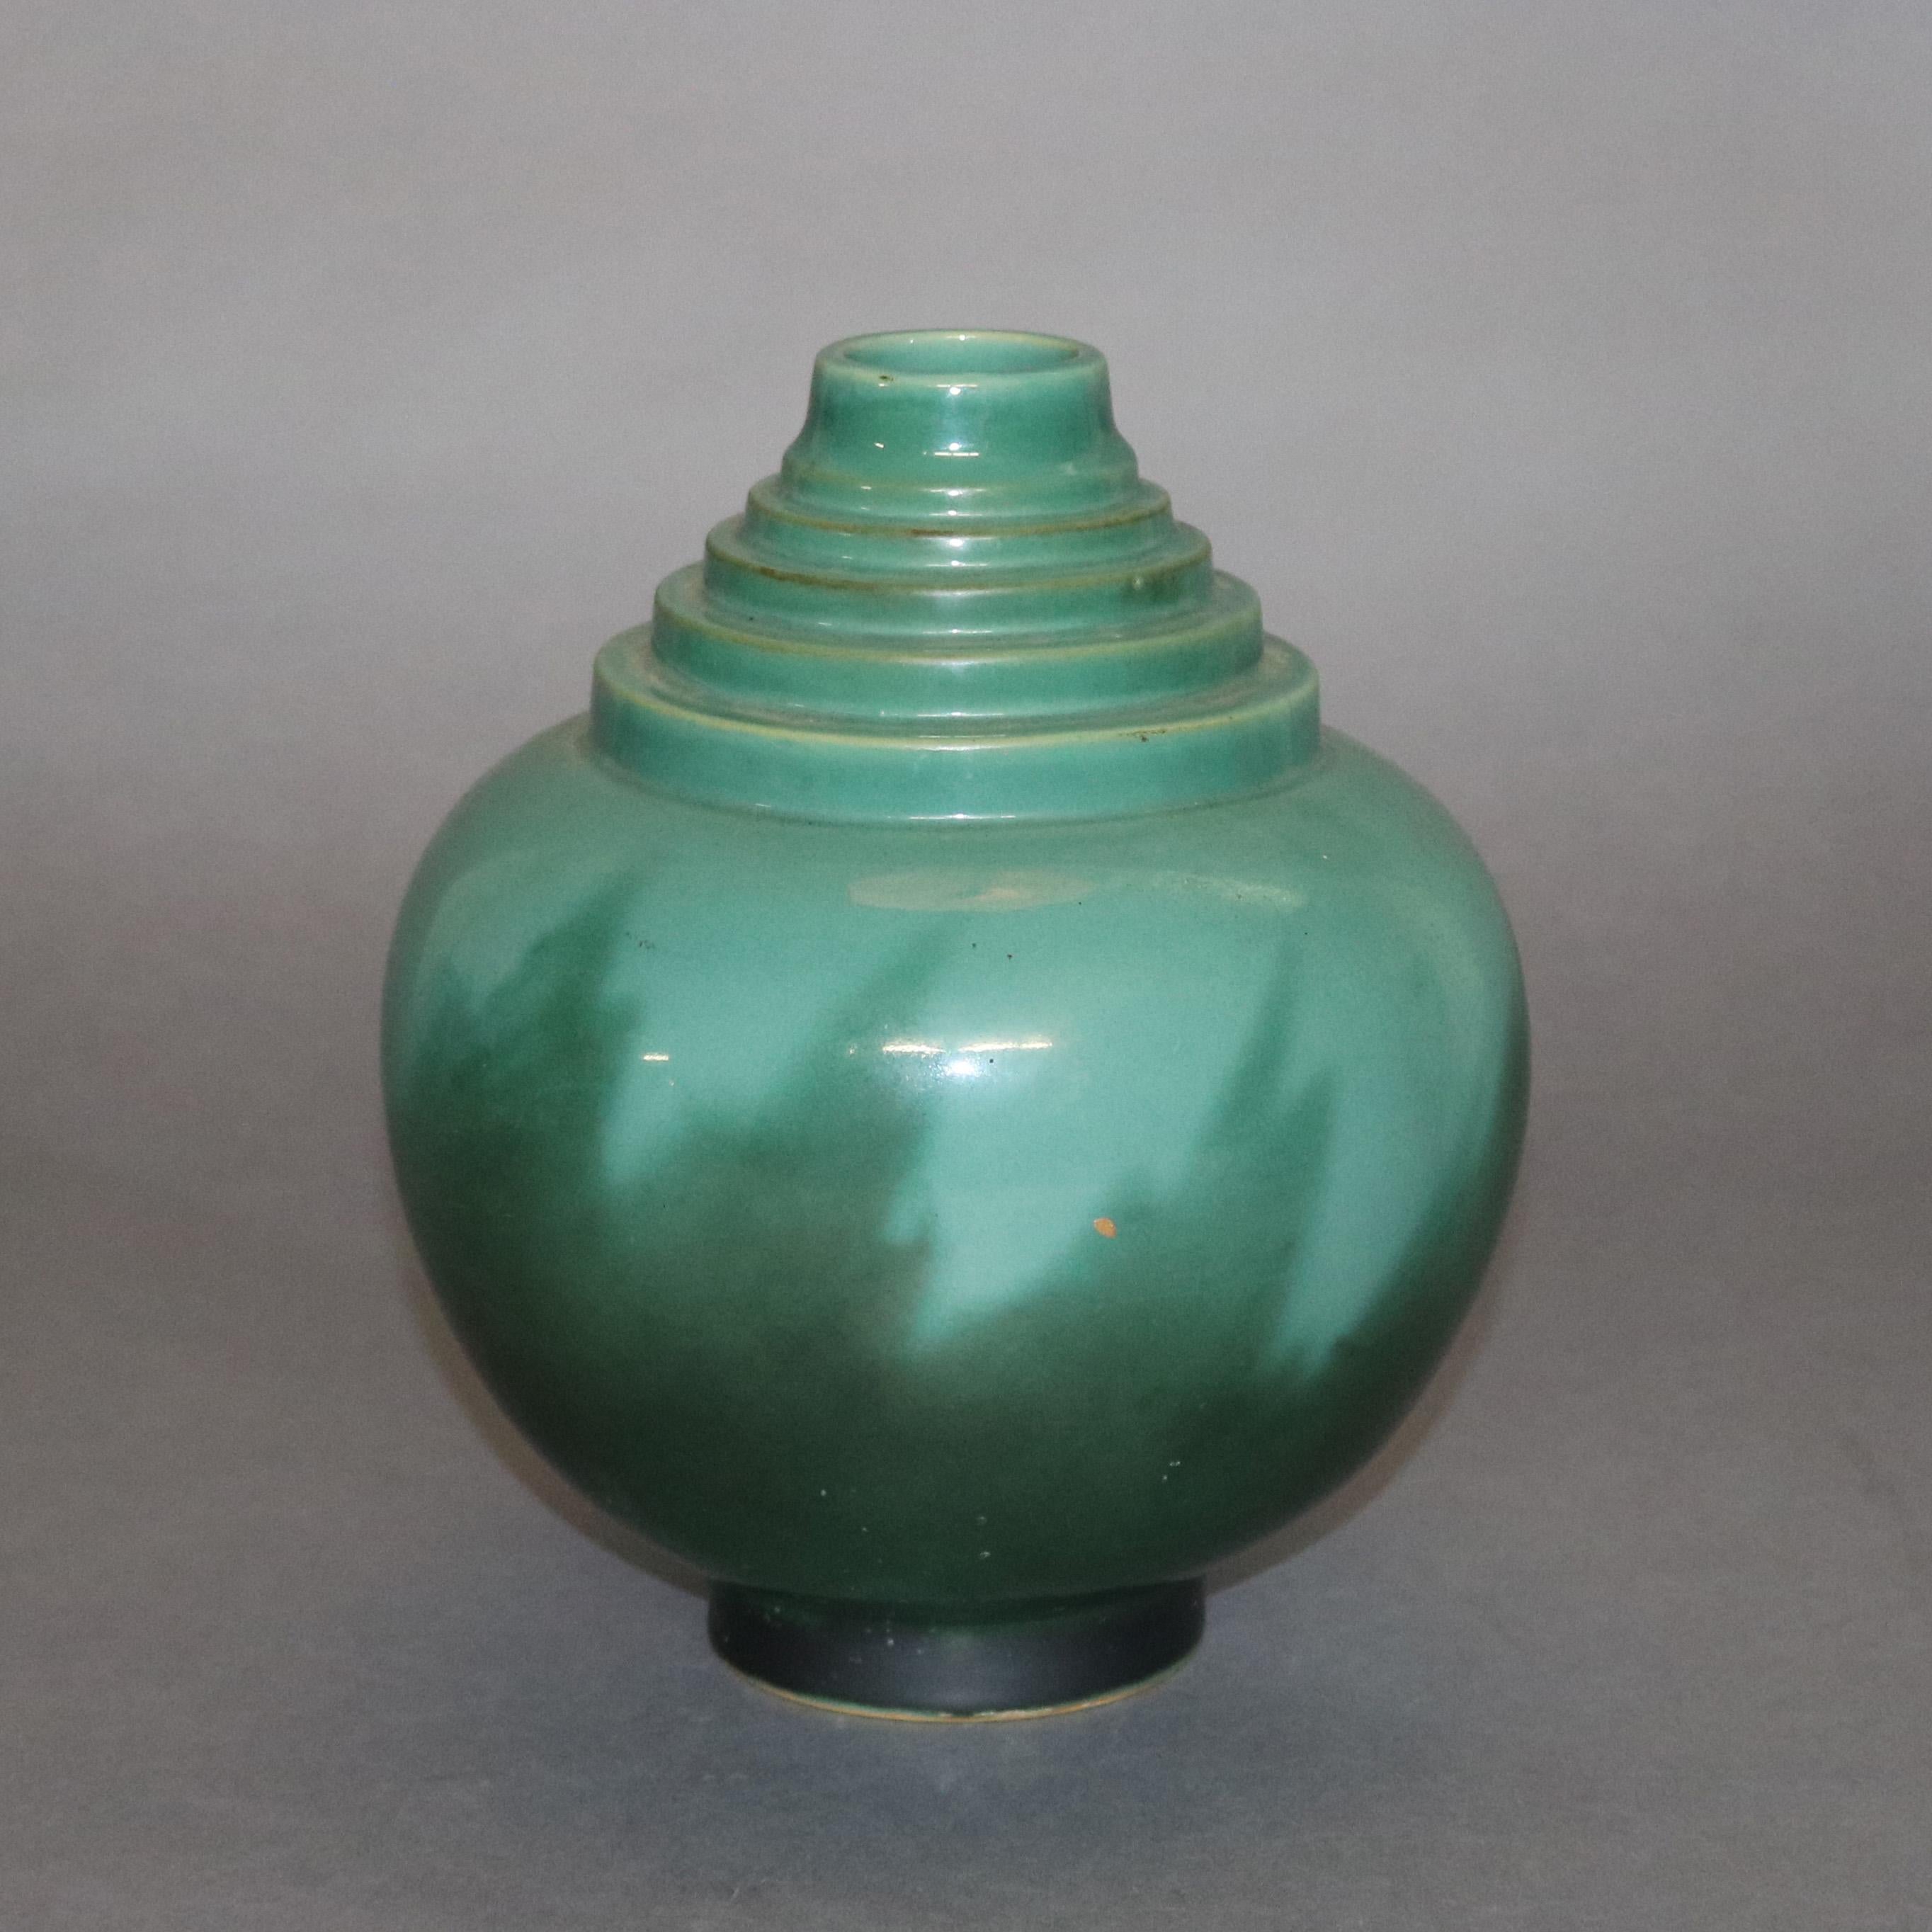 American Art Deco Roseville Pottery Futura Black Flame Vase, 391-10, 20th Century